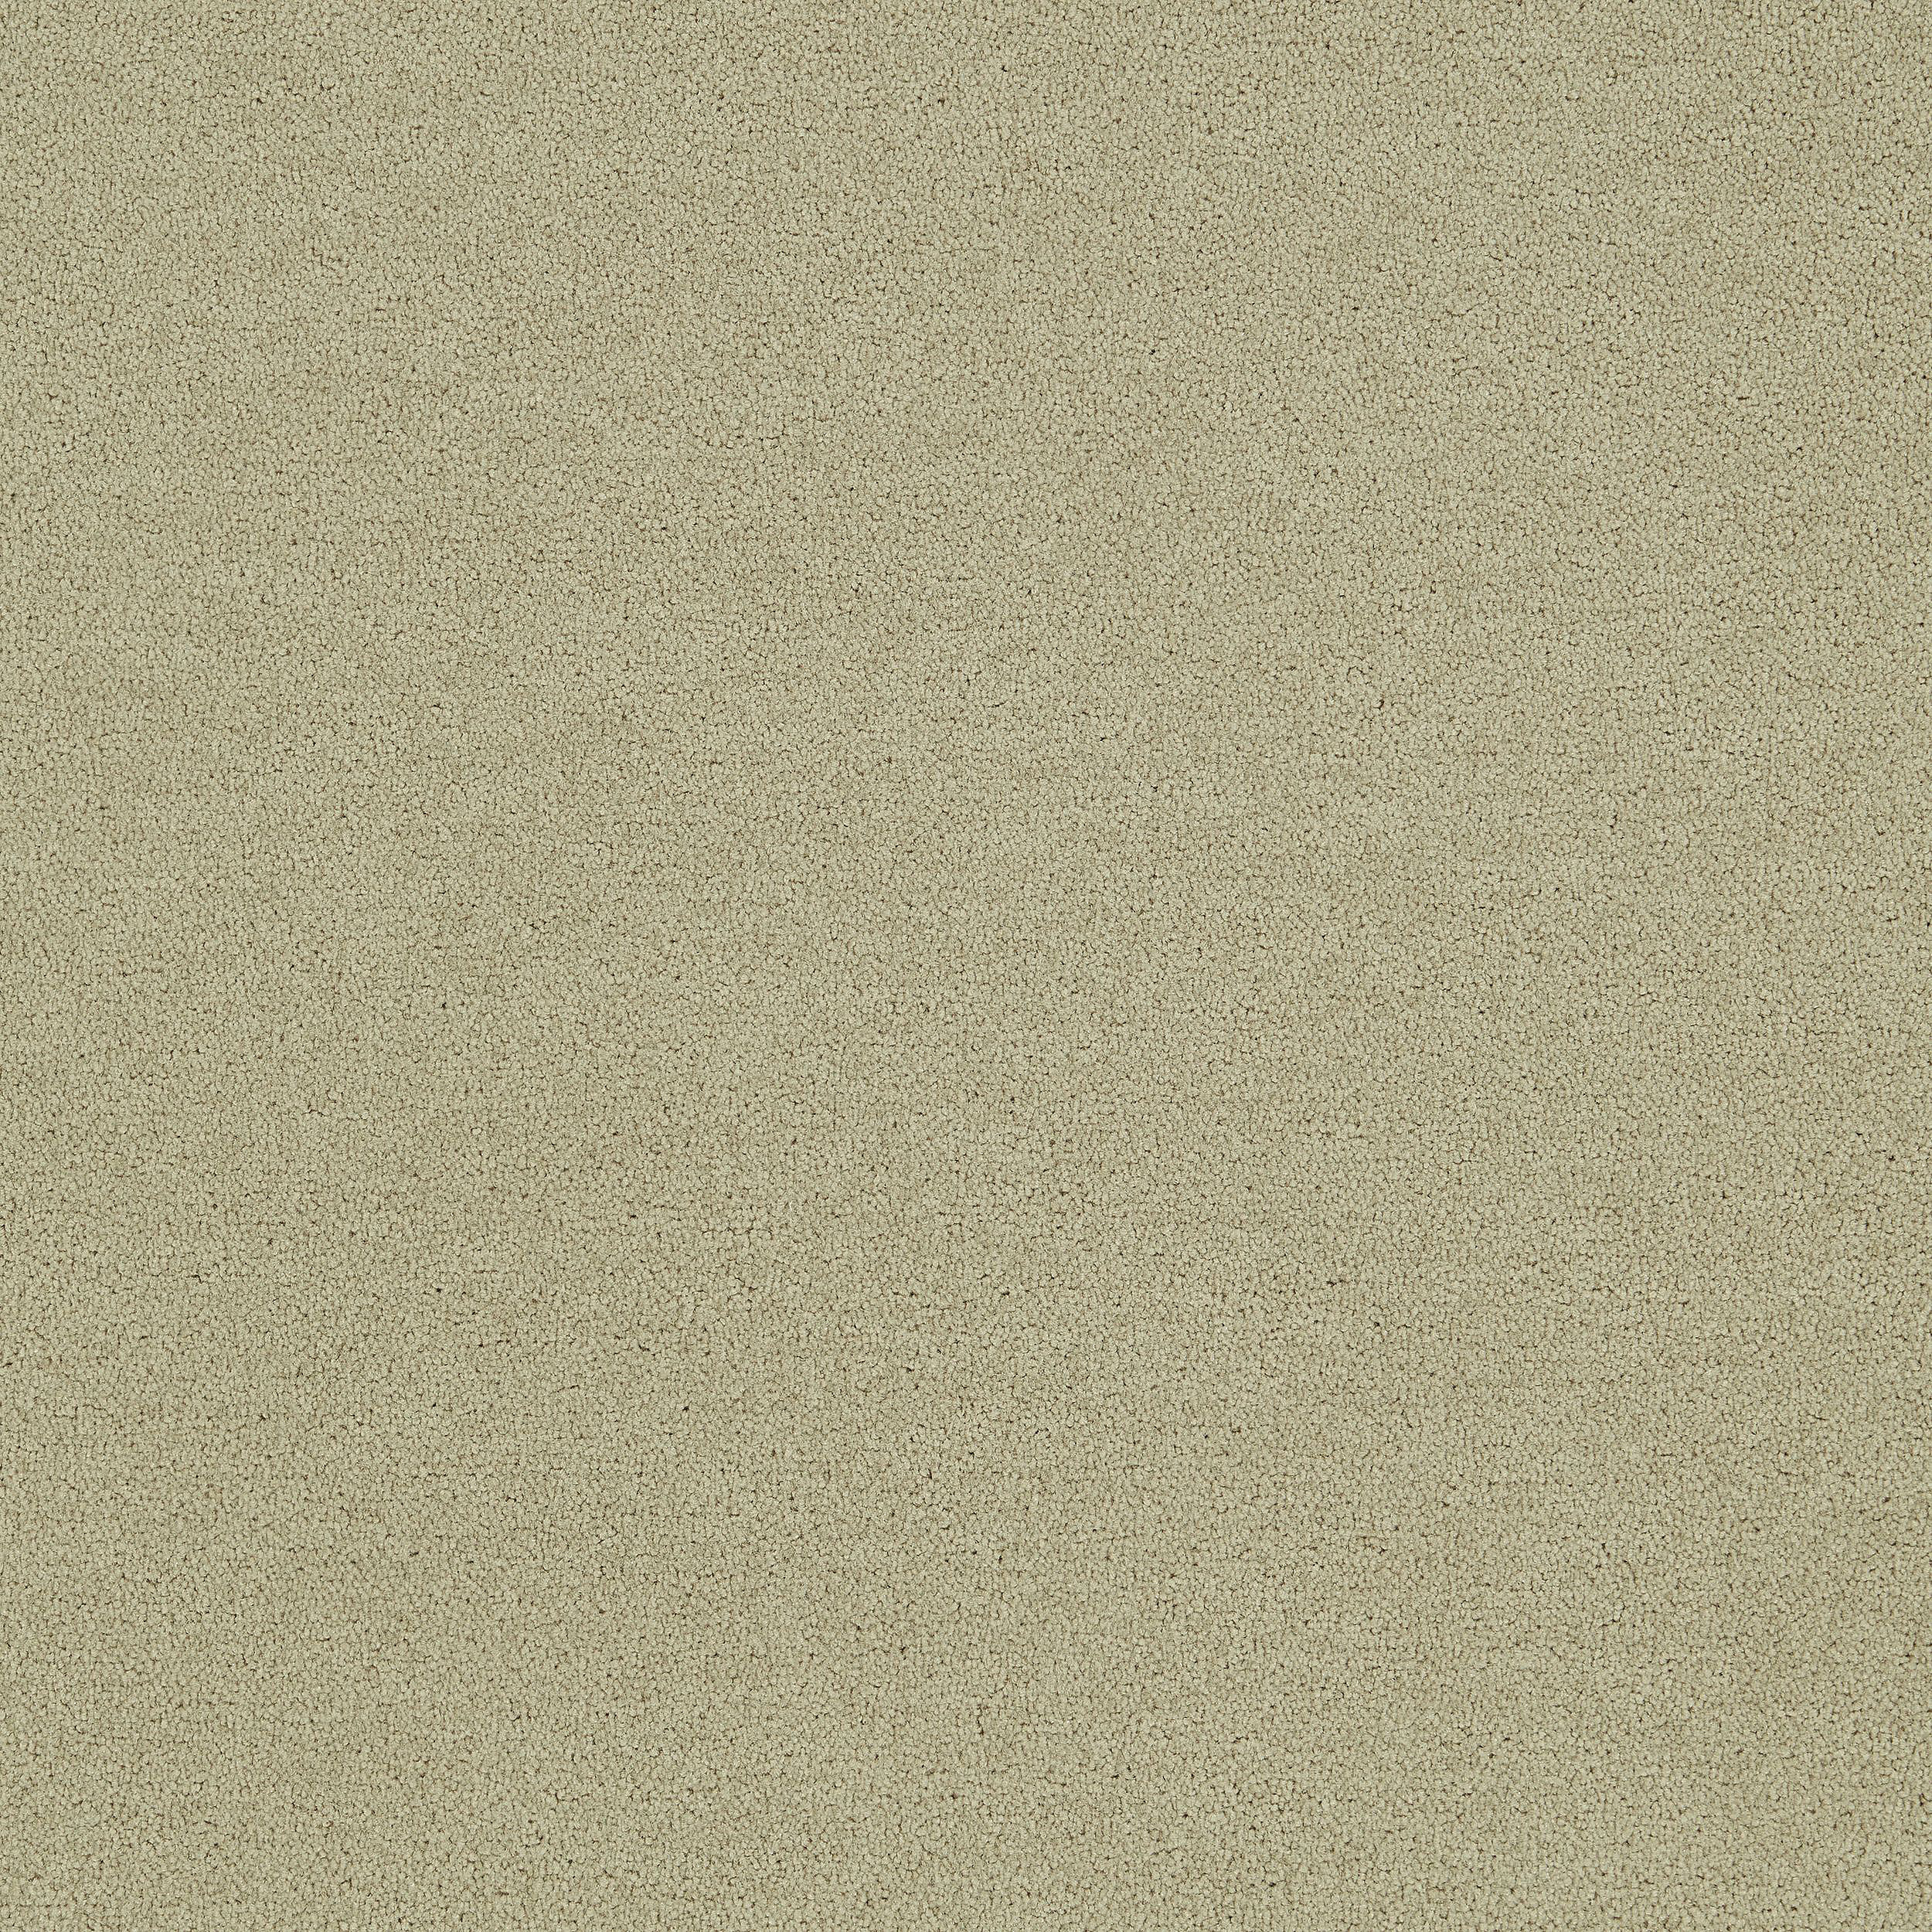 Polichrome Solid Carpet Tile In Turtledove número de imagen 6